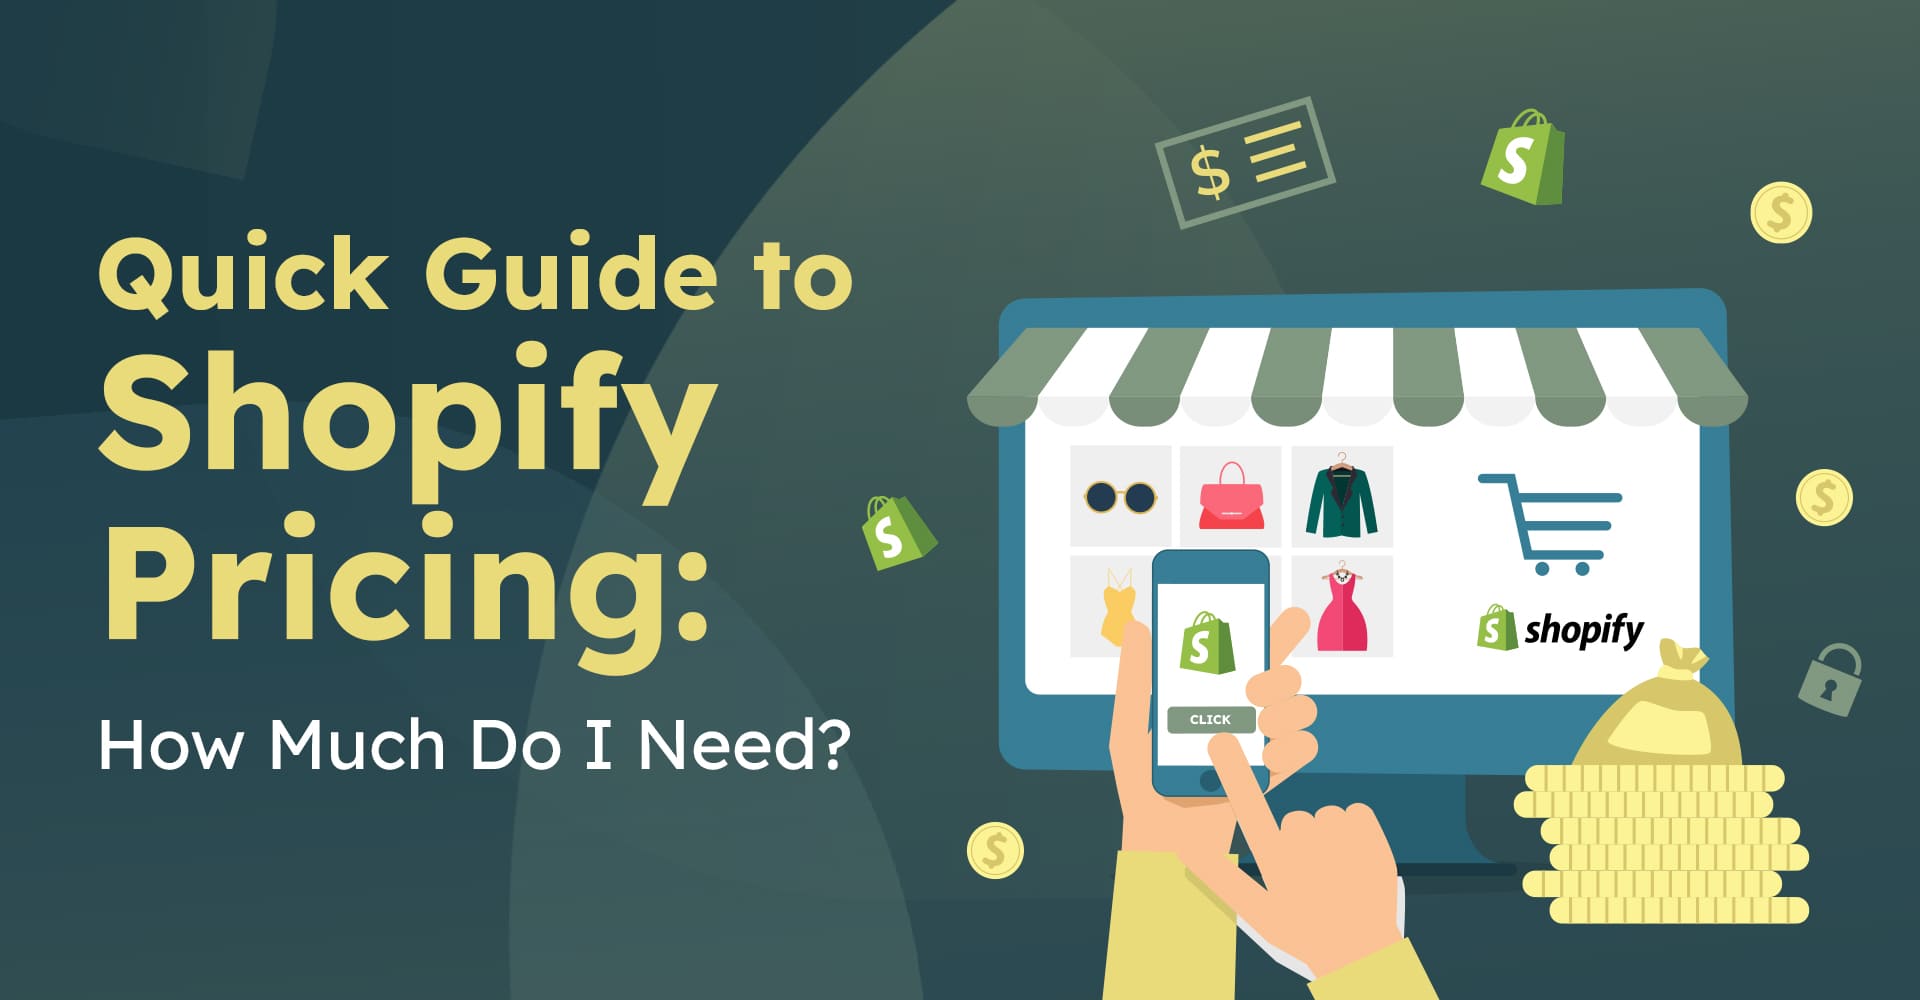 Shopify Login - Ways You Can Login With Shopify - Liquify Web Design